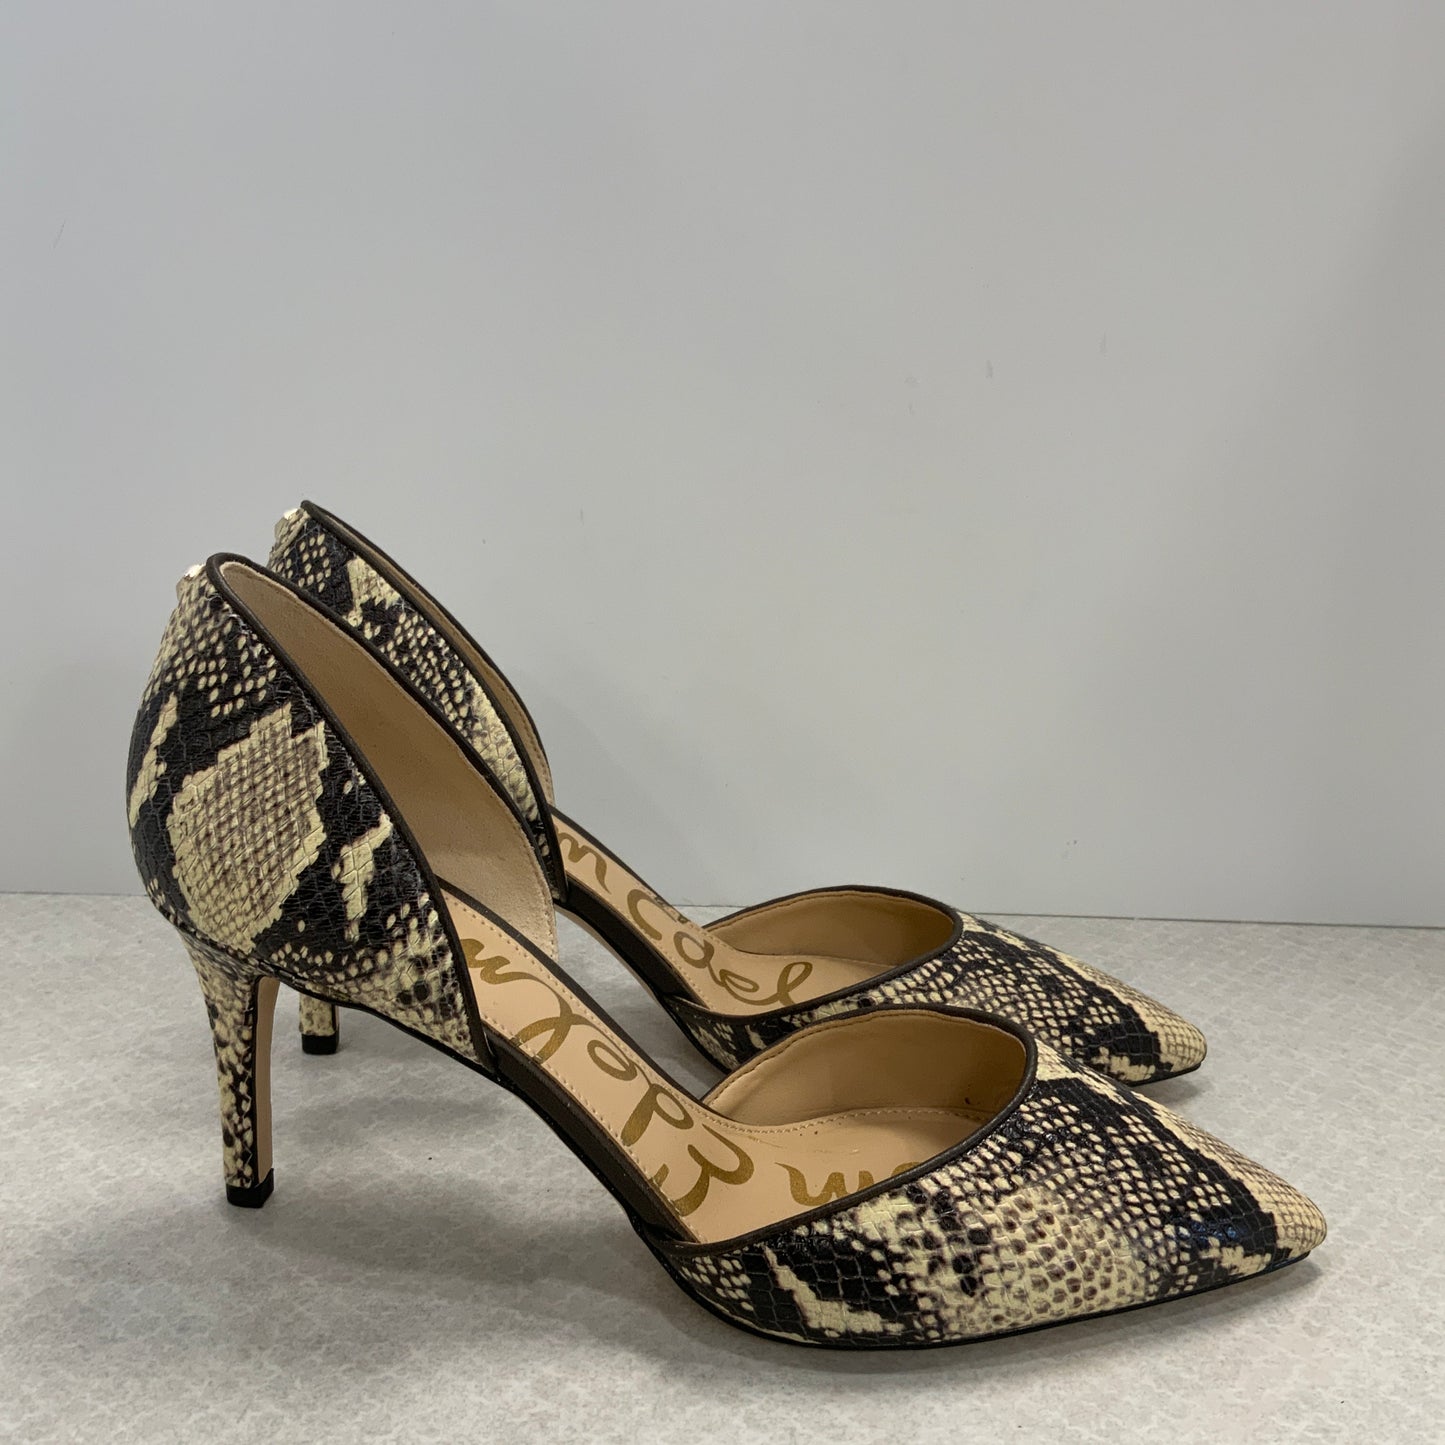 Snakeskin Print Shoes Heels Stiletto Sam Edelman, Size 8